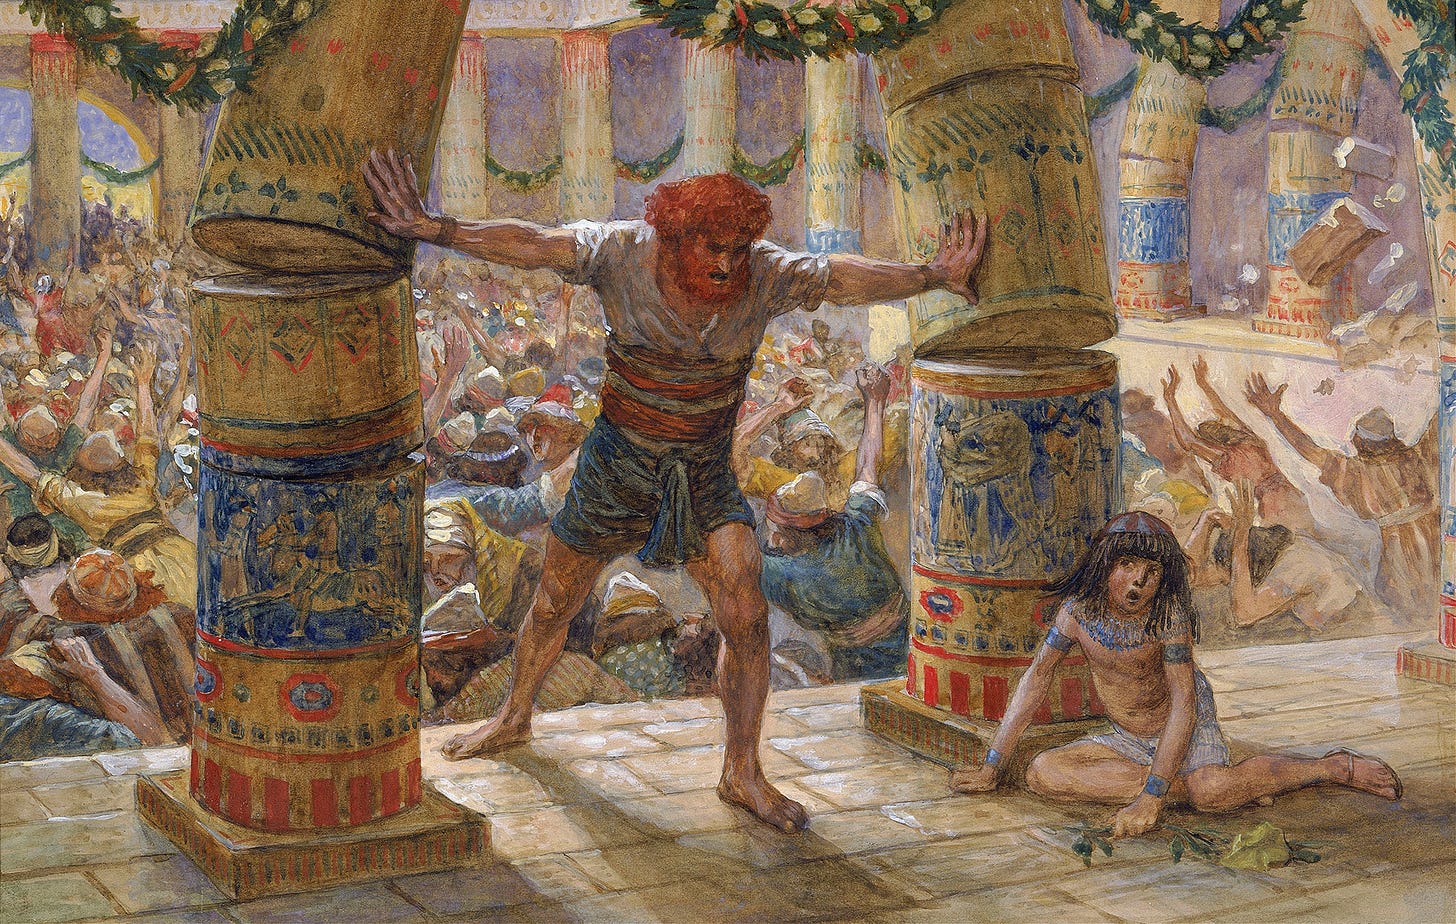 Samson Puts Down the Pillars (c. 1896-1902) by James Tissot